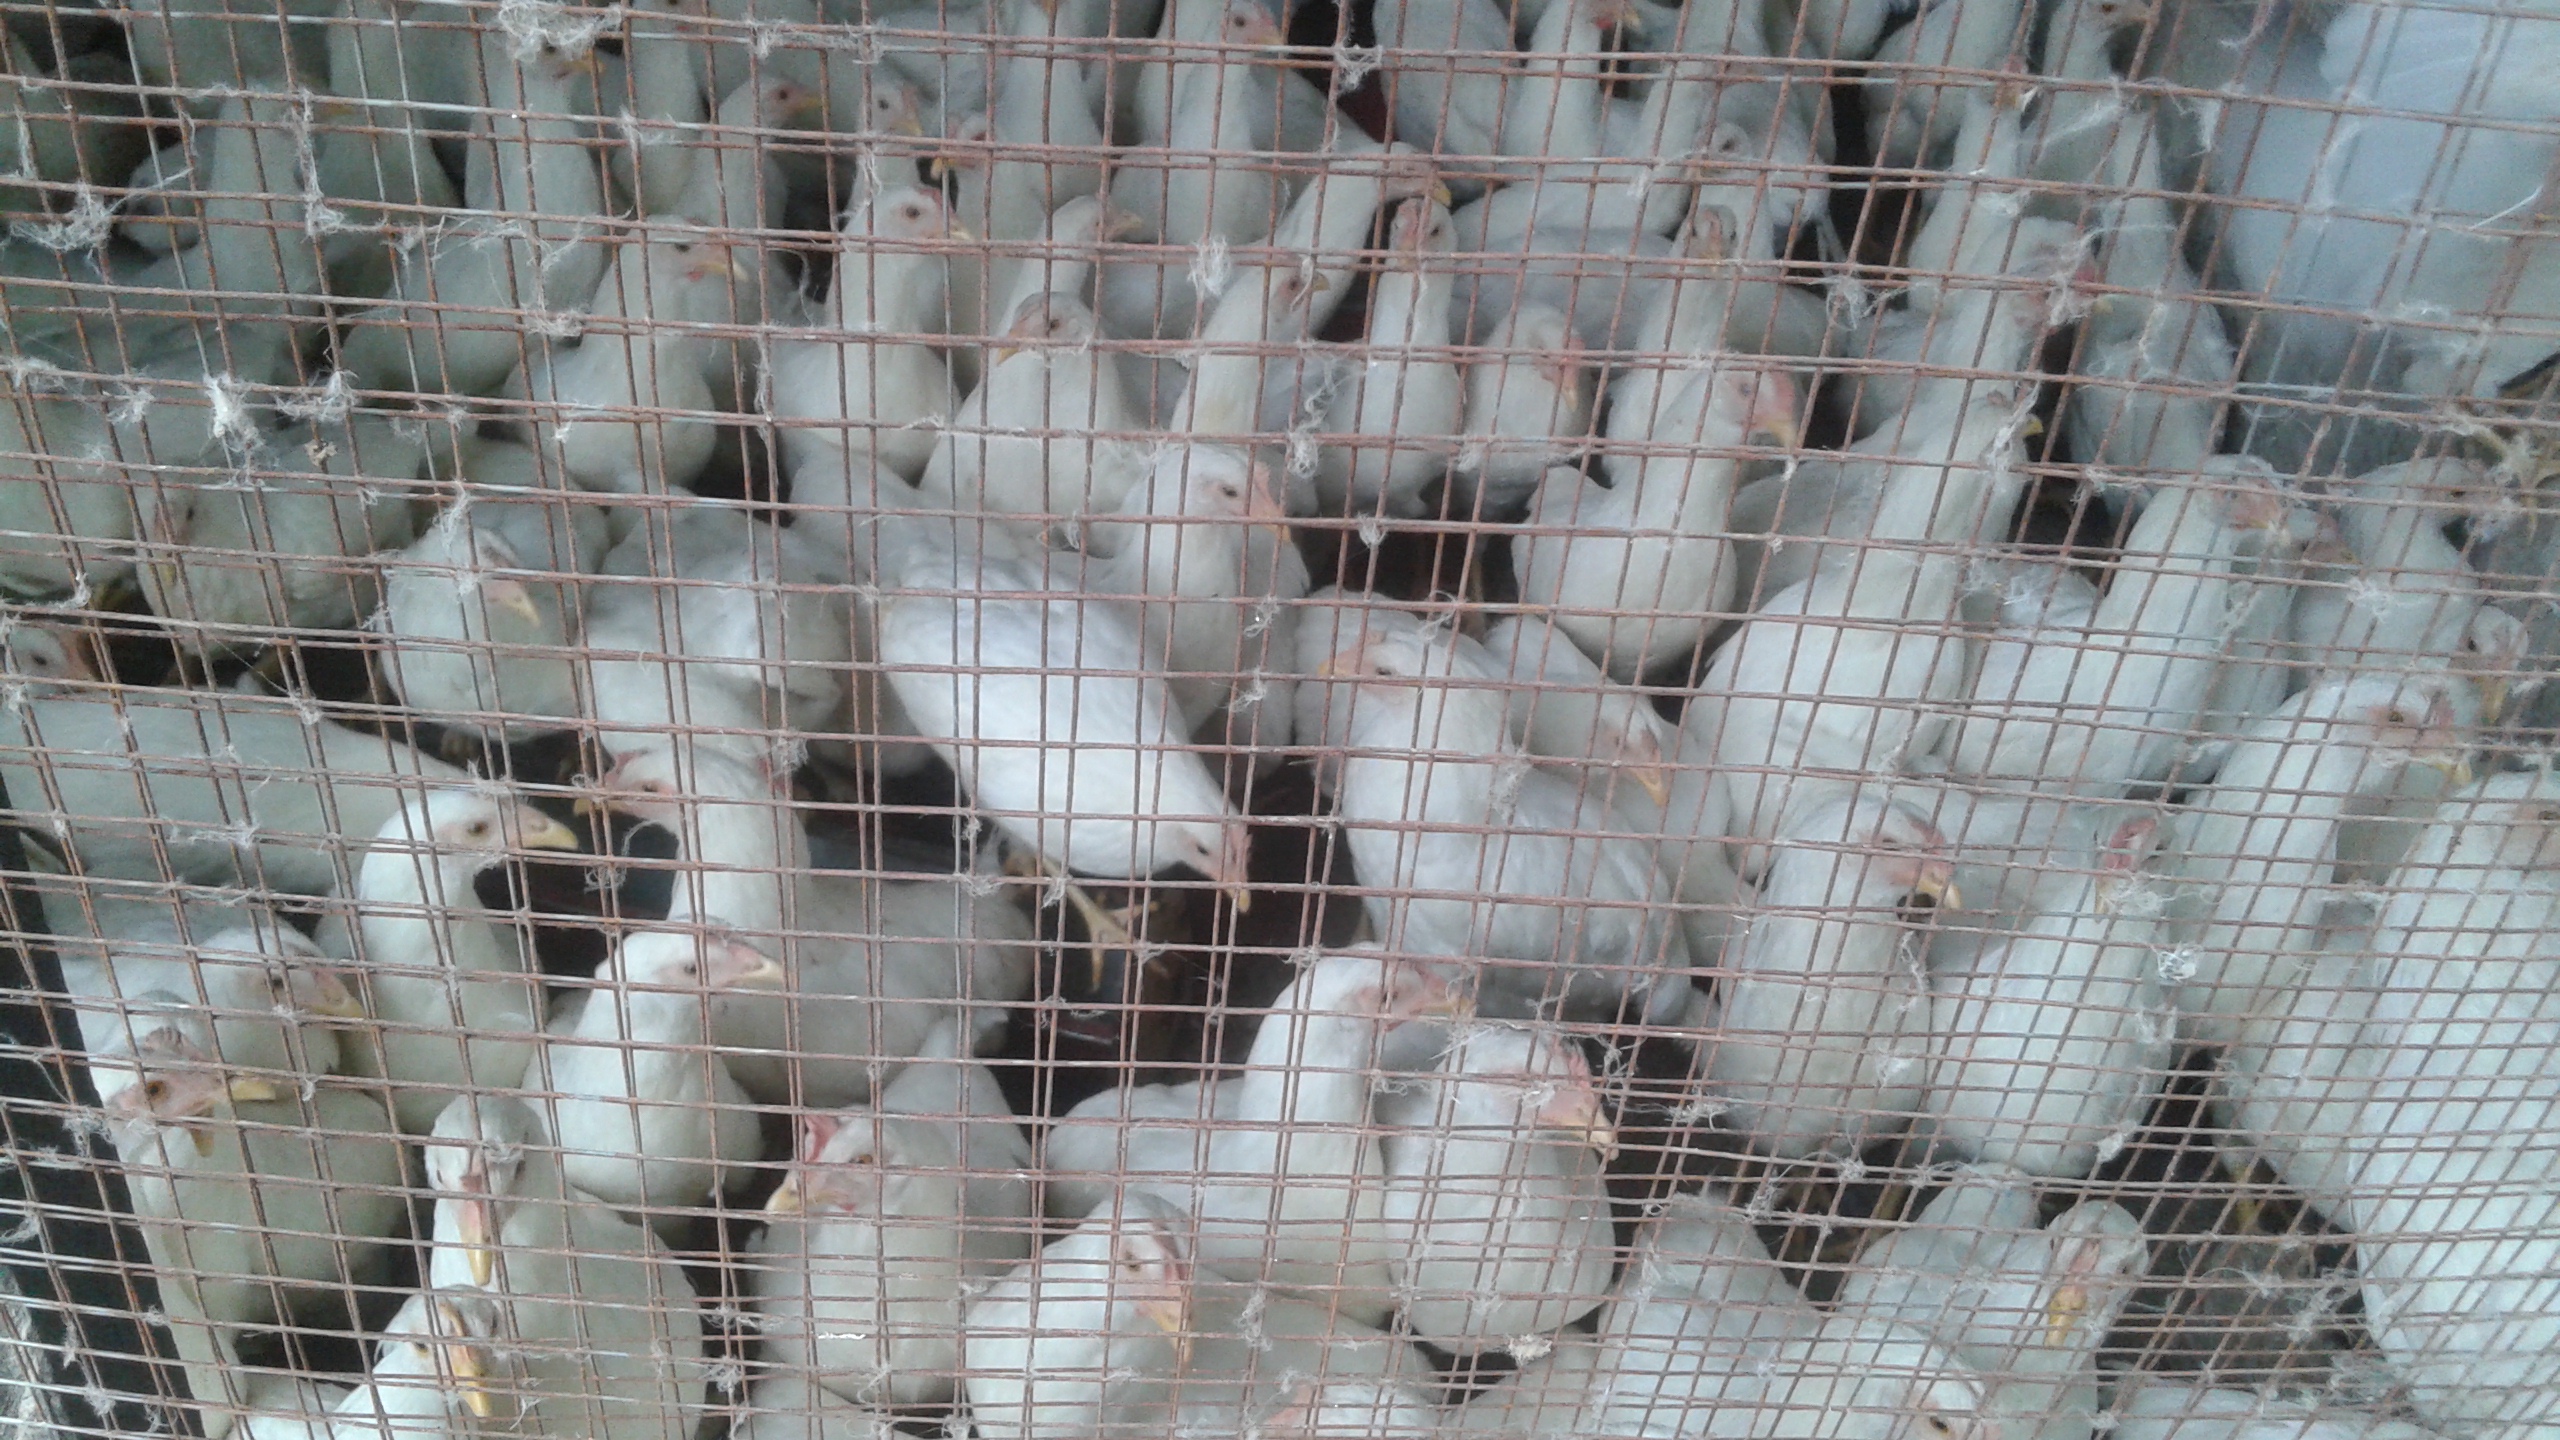 Omar Manjang Poultry Farm